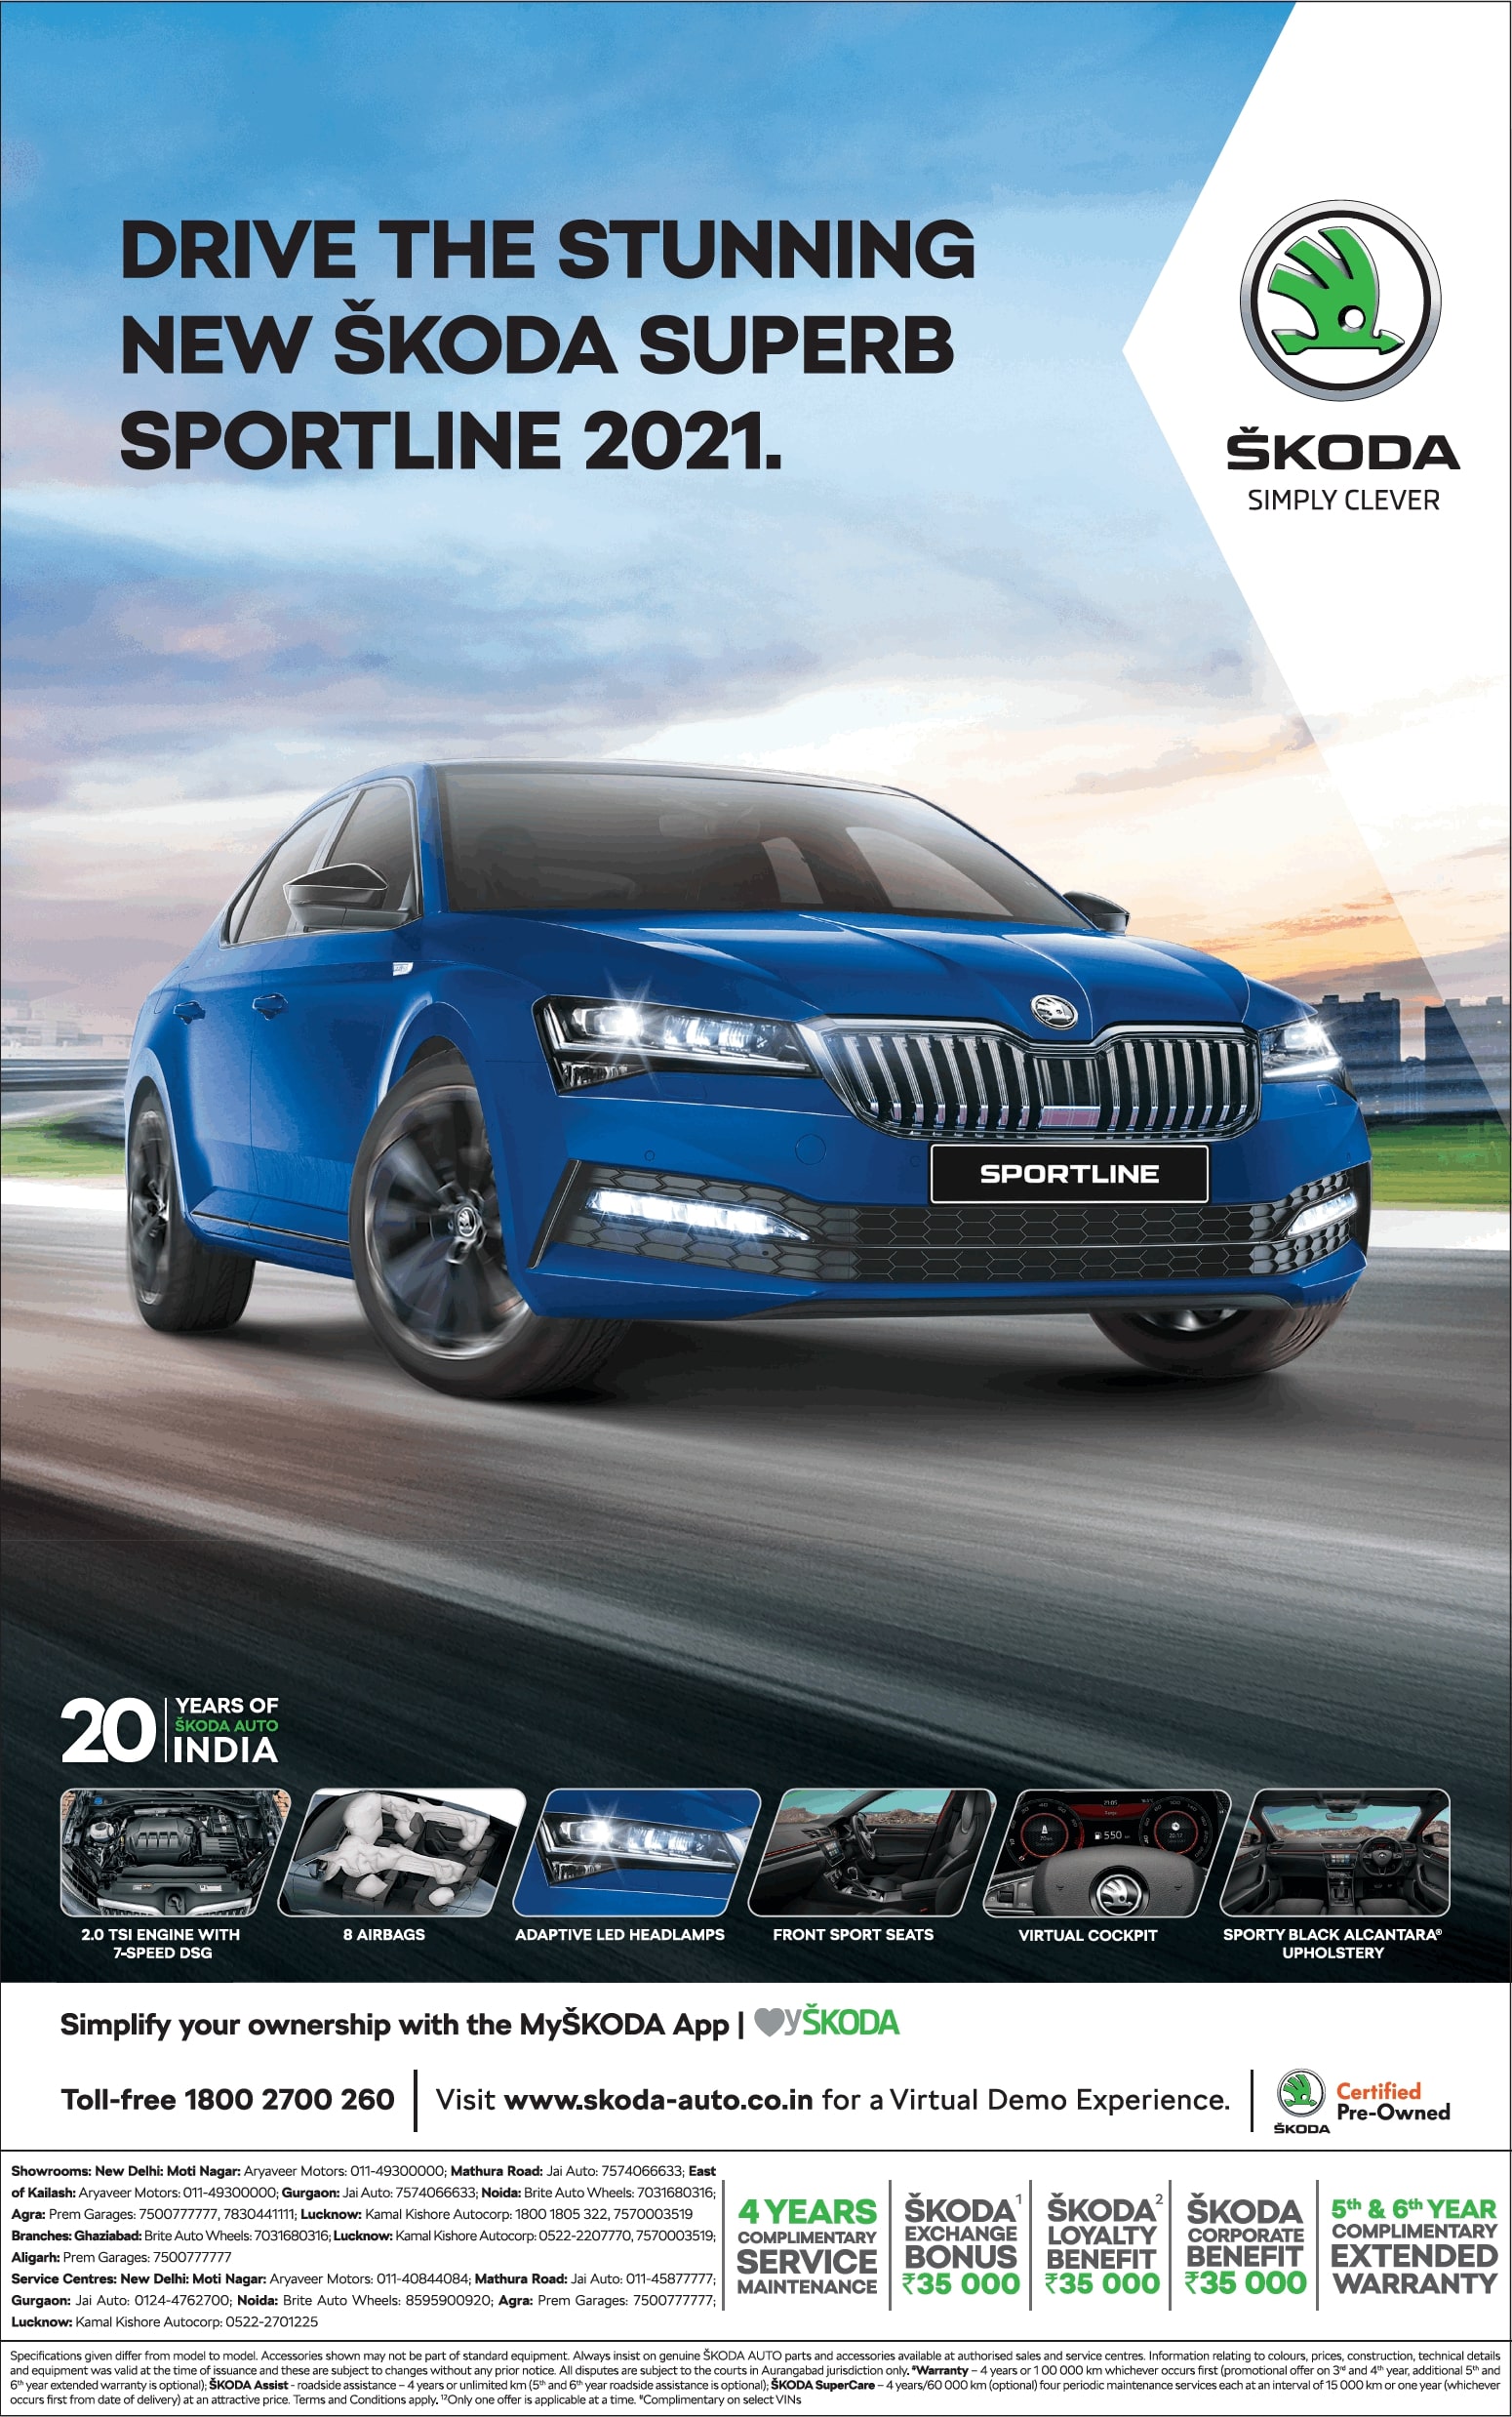 skoda-drive-the-stunning-new-skoda-superb-sportline-2021-ad-times-of-india-delhi-16-04-2021